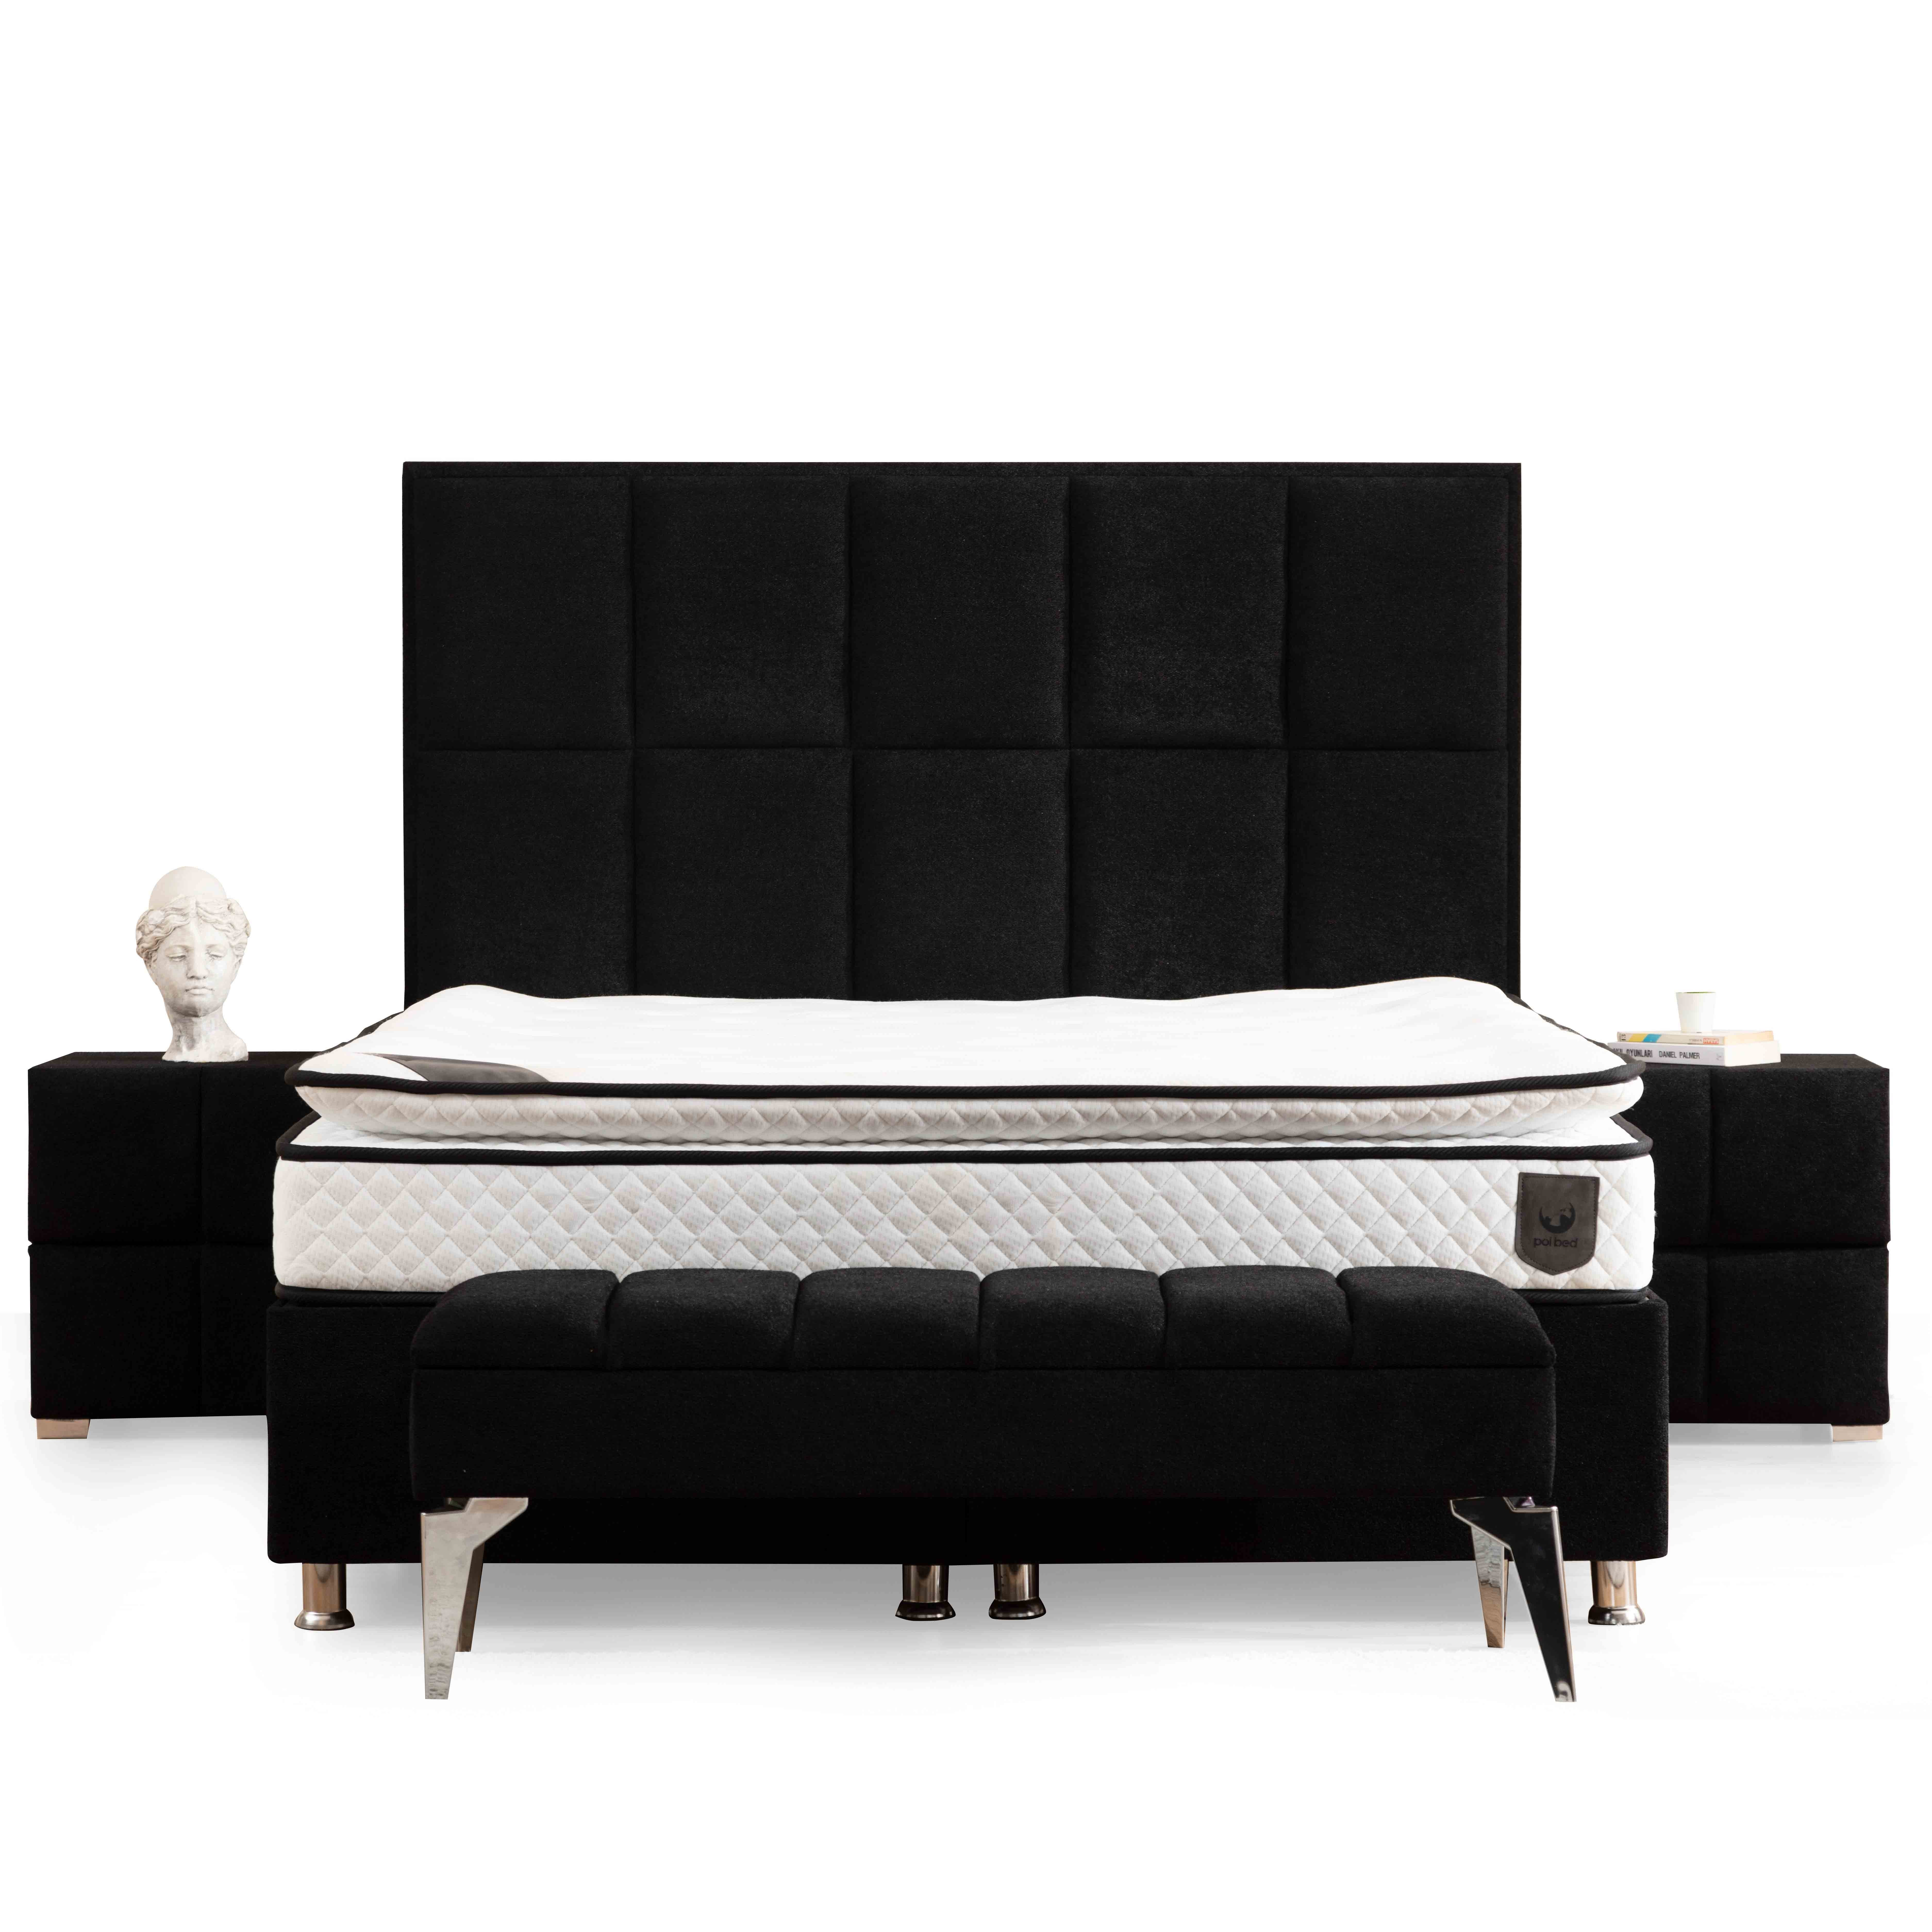 Lovita Bed With Storage 90*190